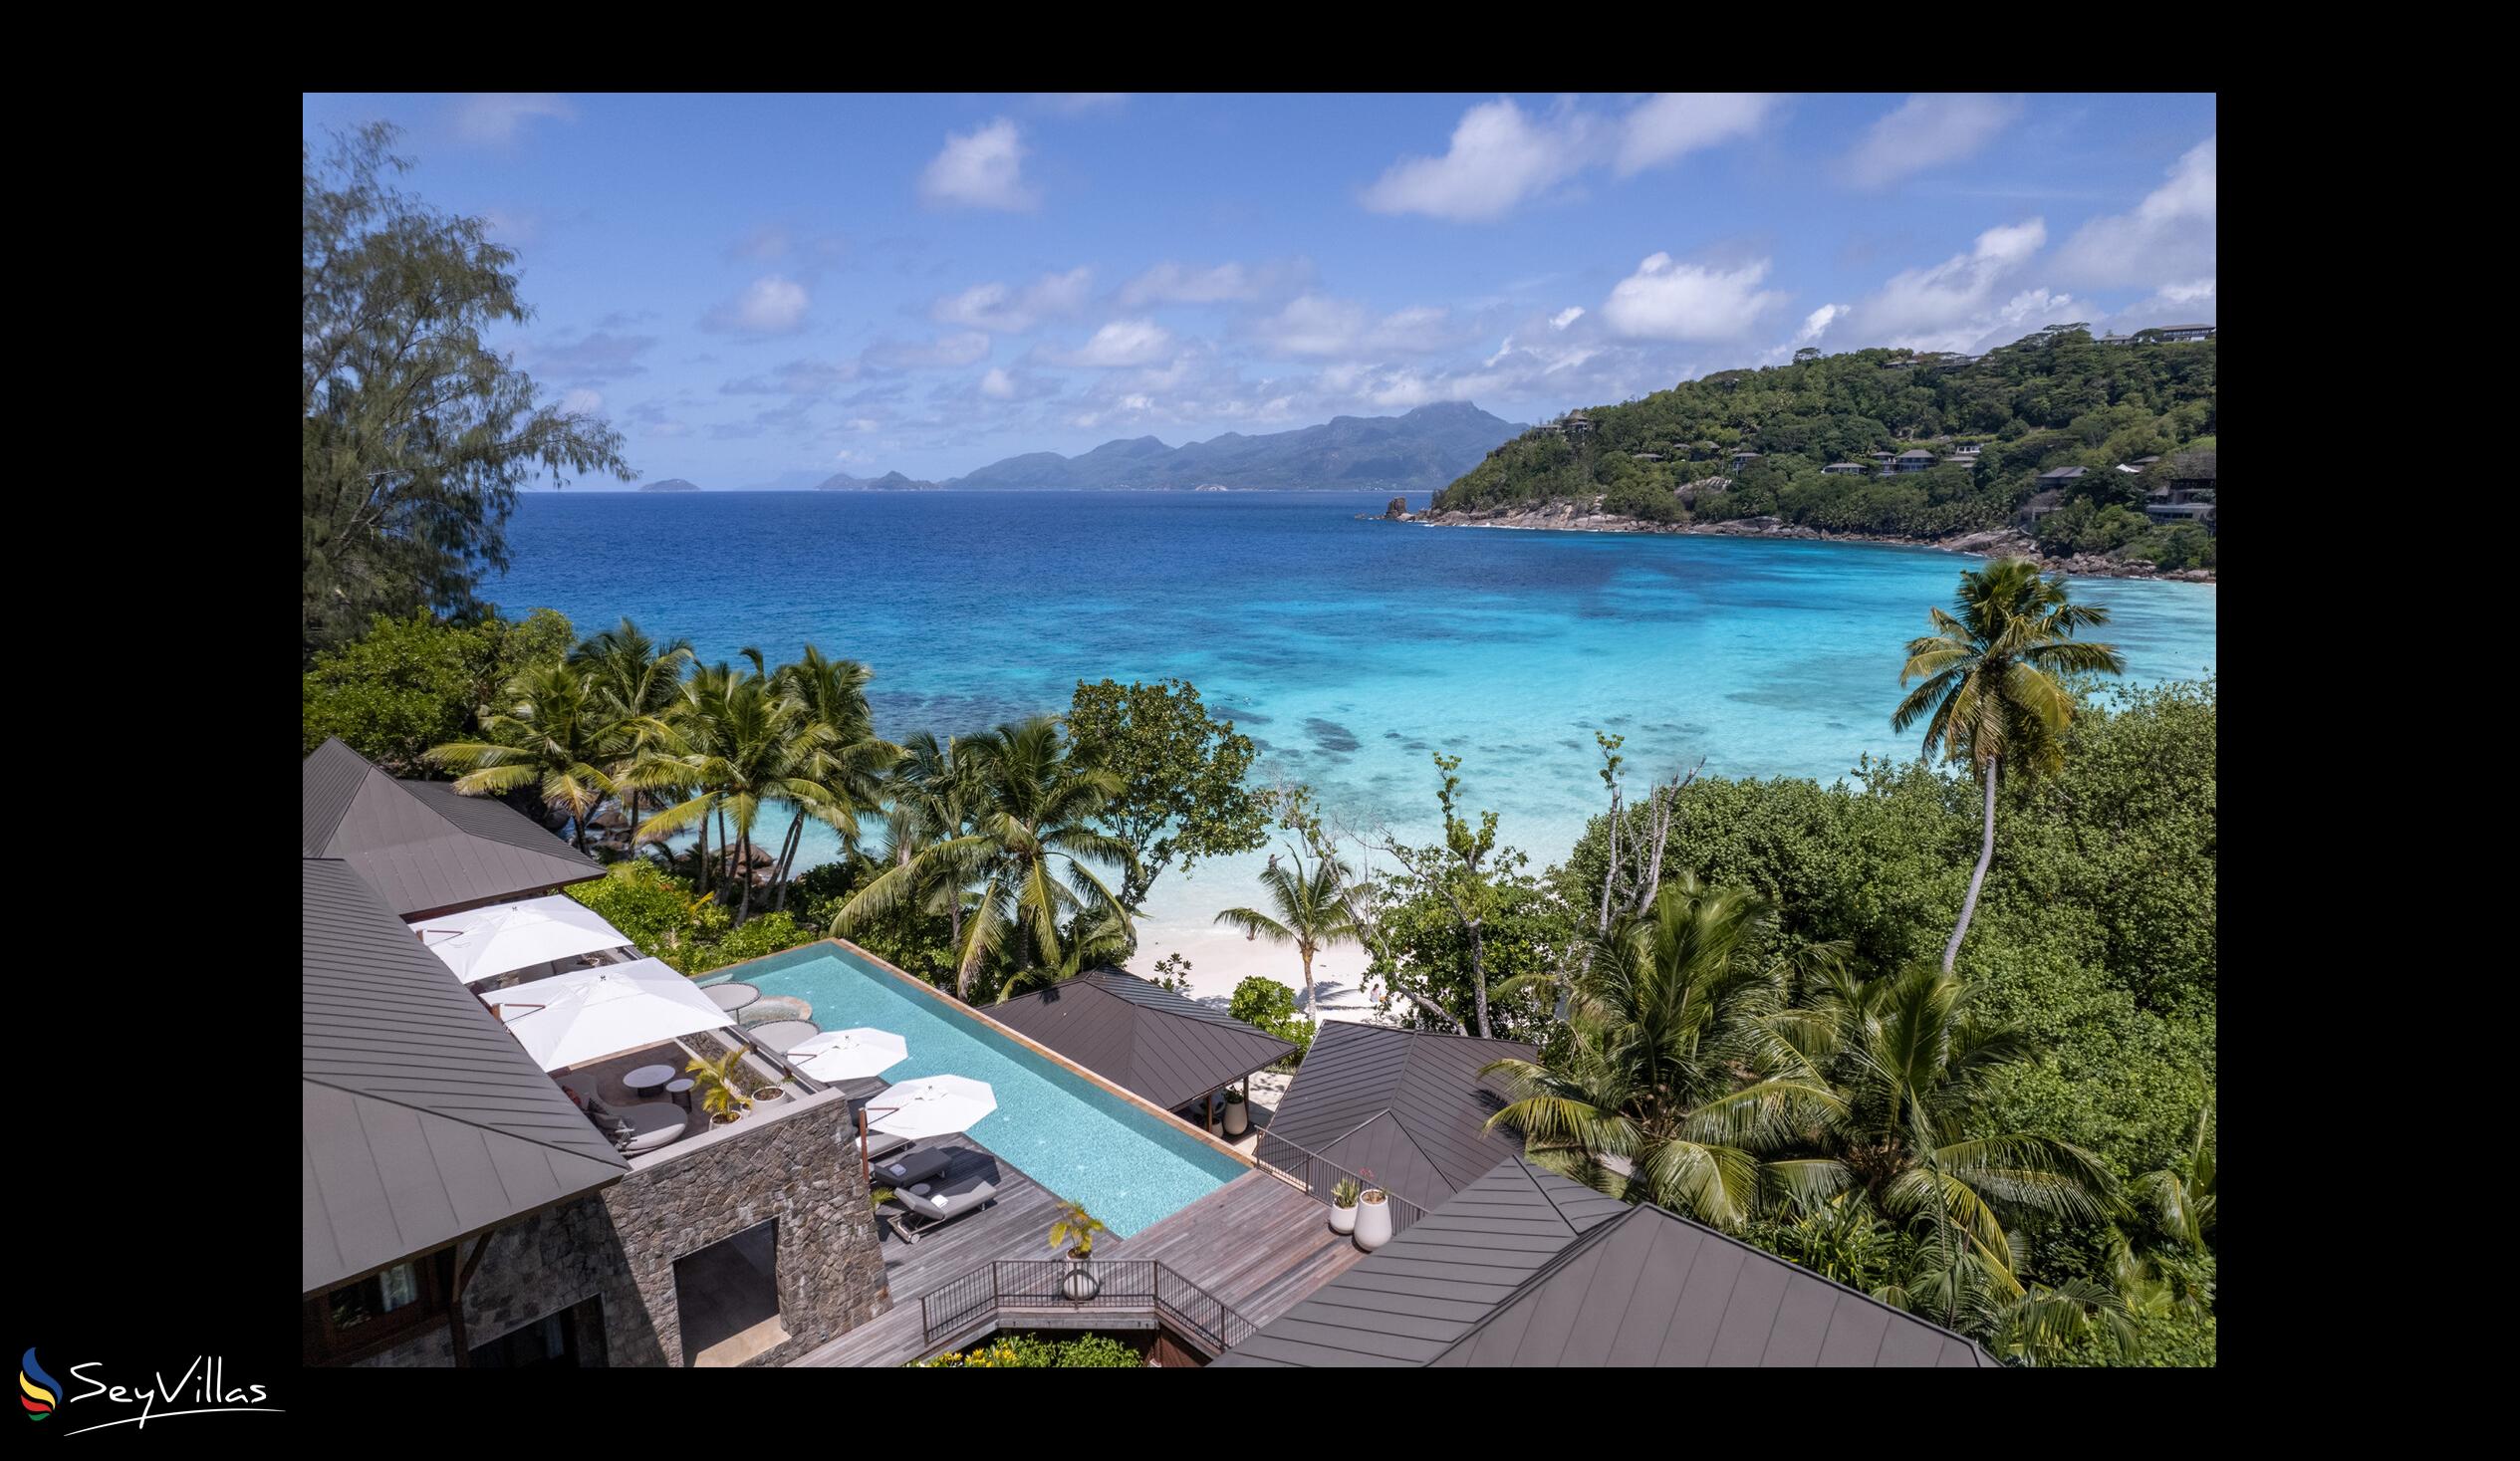 Photo 92: Four Seasons Resort - 3-Bedroom Royal Suite - Mahé (Seychelles)